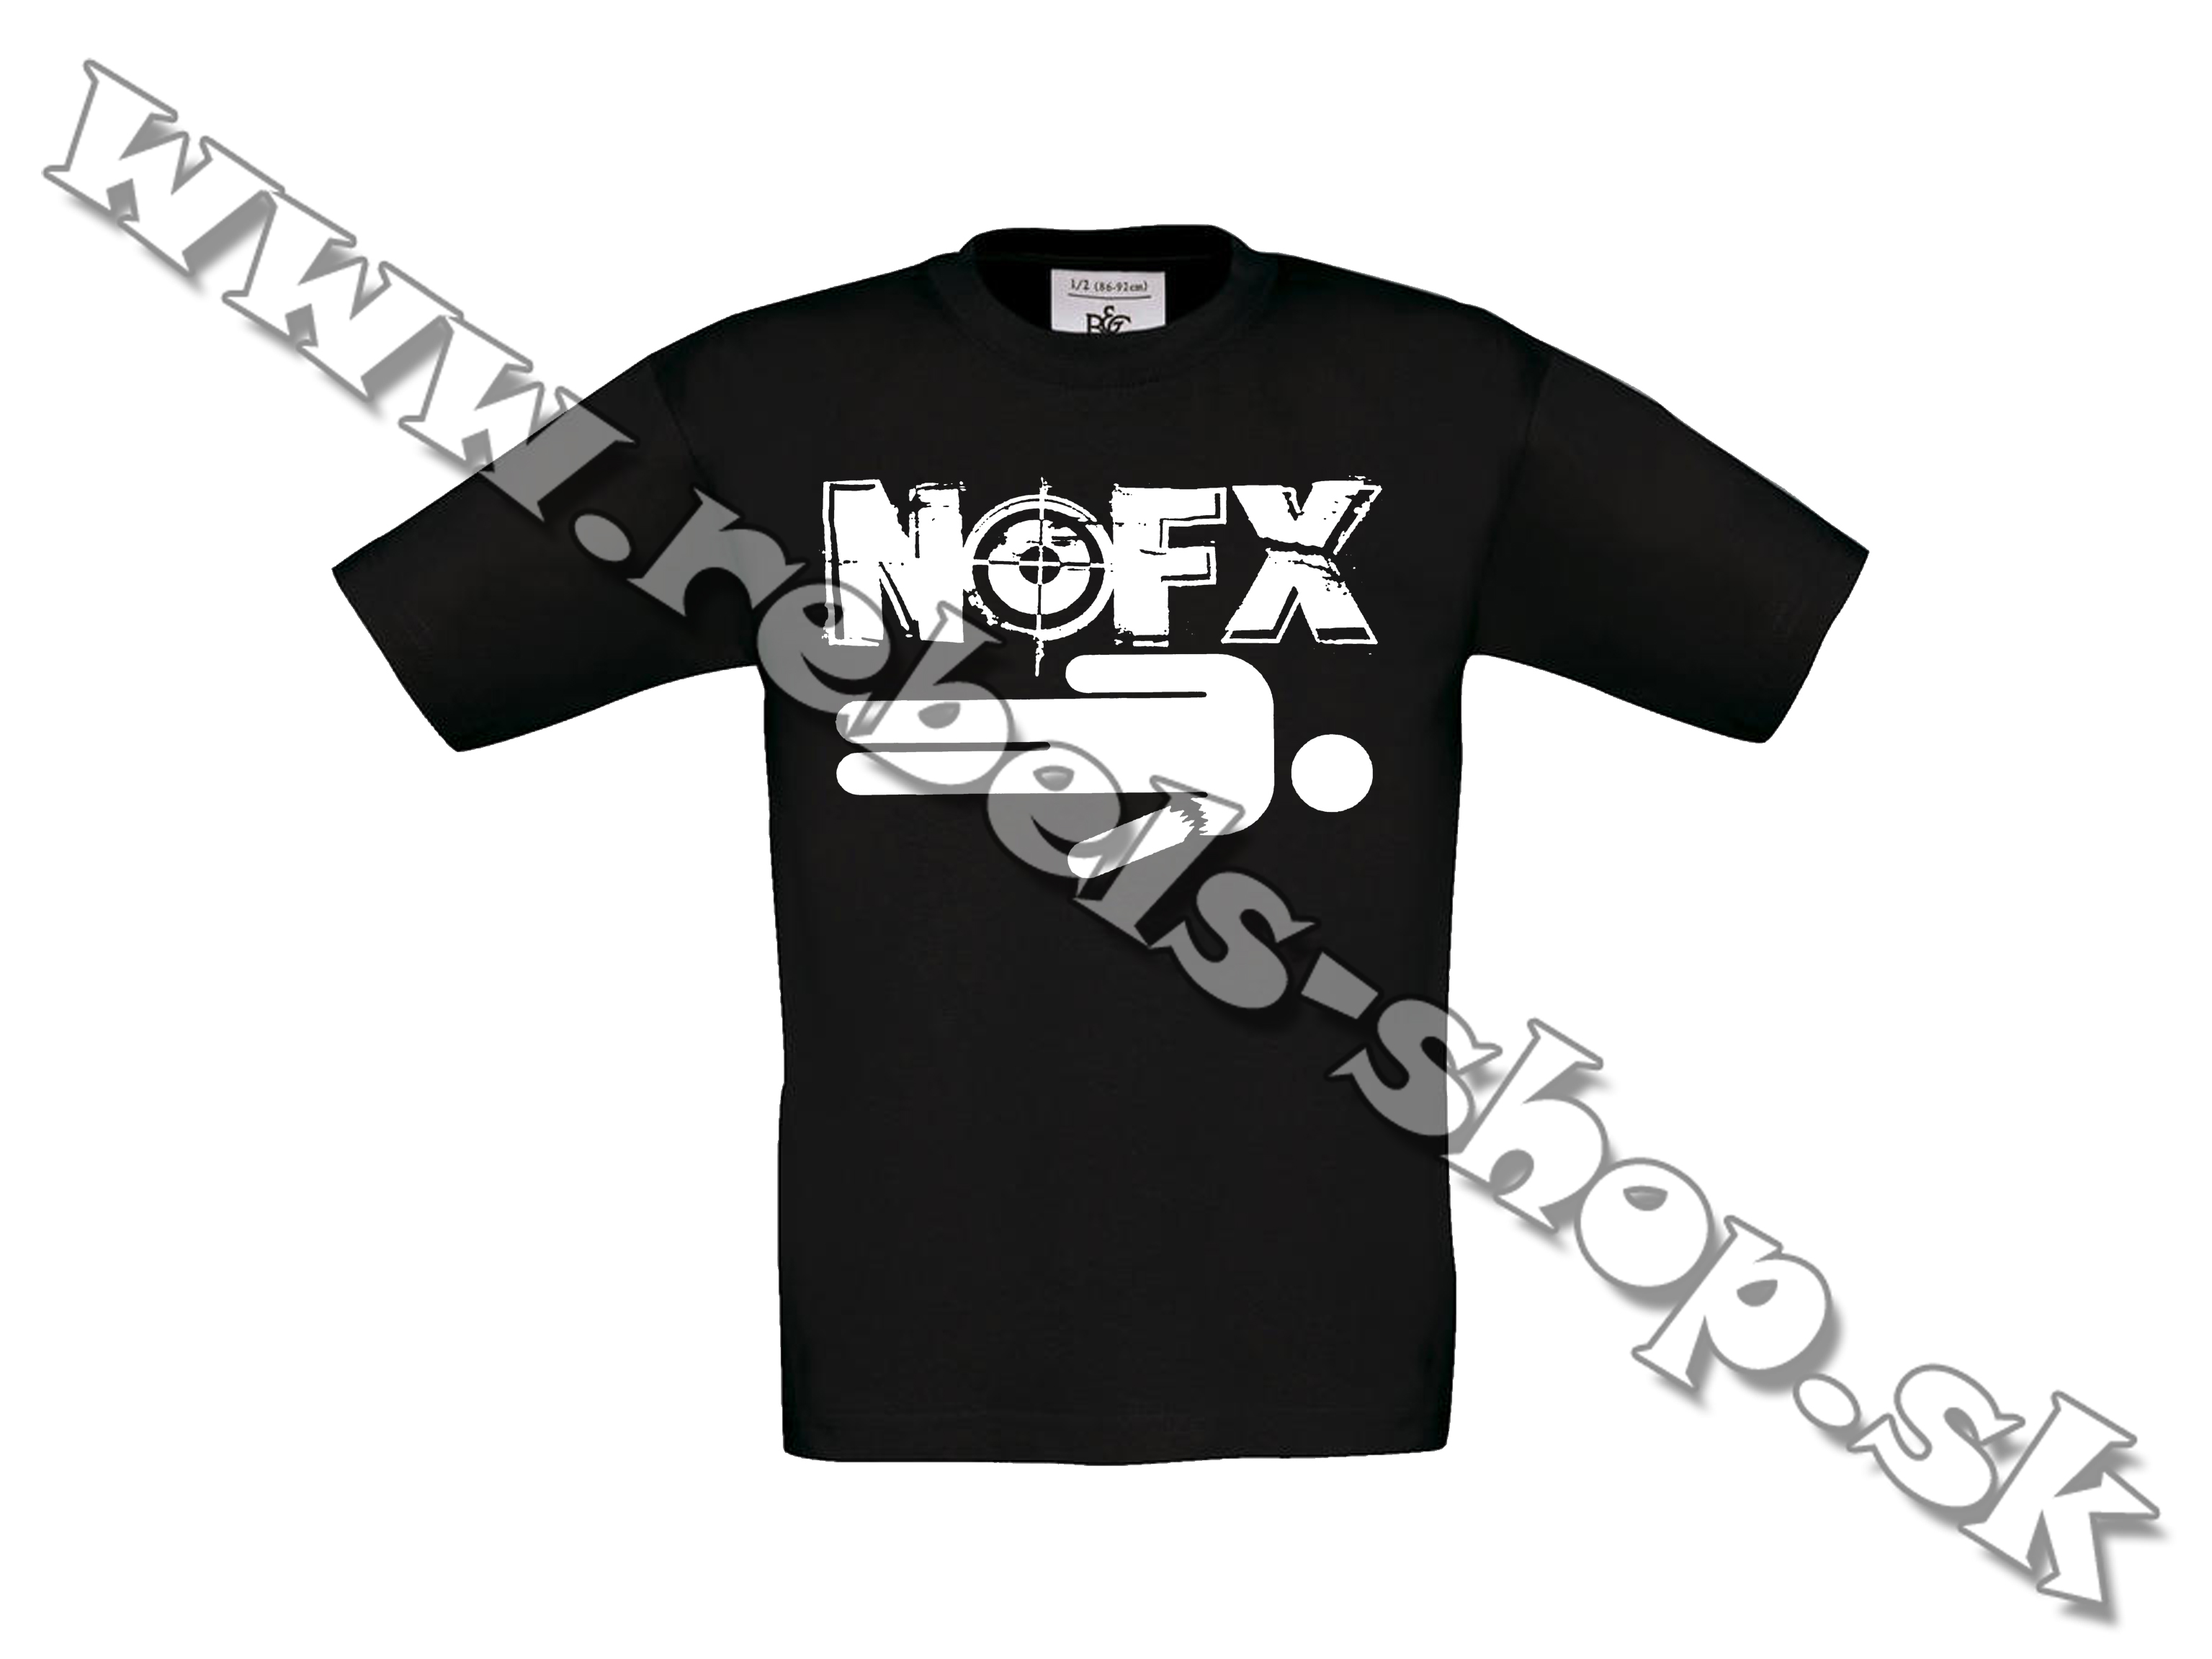 Detské Tričko "NOFX"